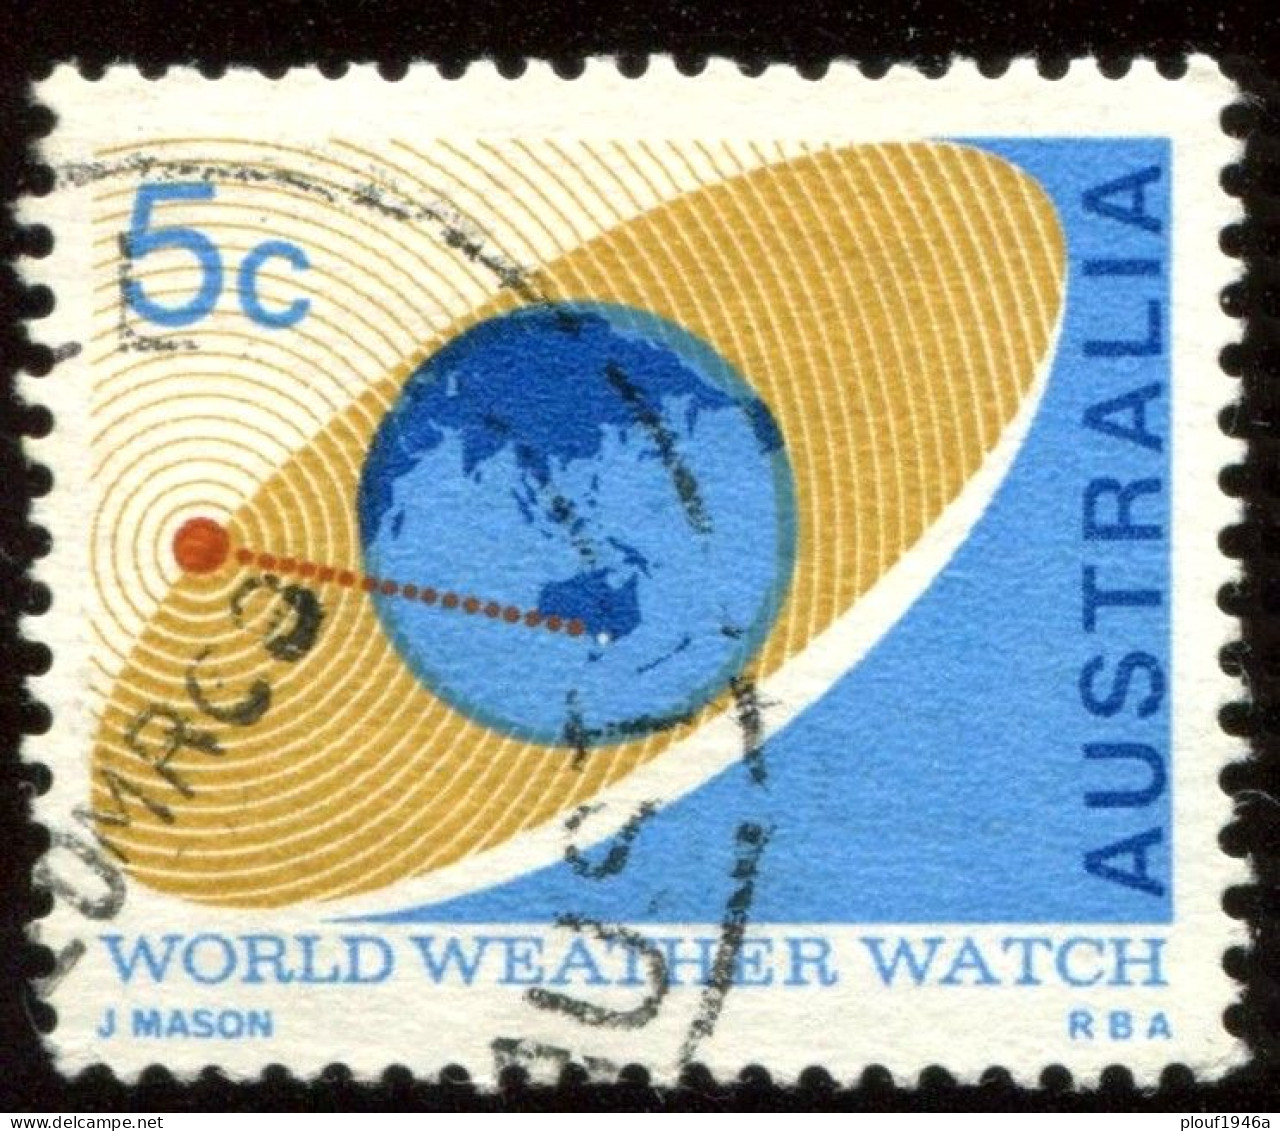 Pays :  46 (Australie : Confédération)      Yvert Et Tellier N° :  364 (o) - Used Stamps